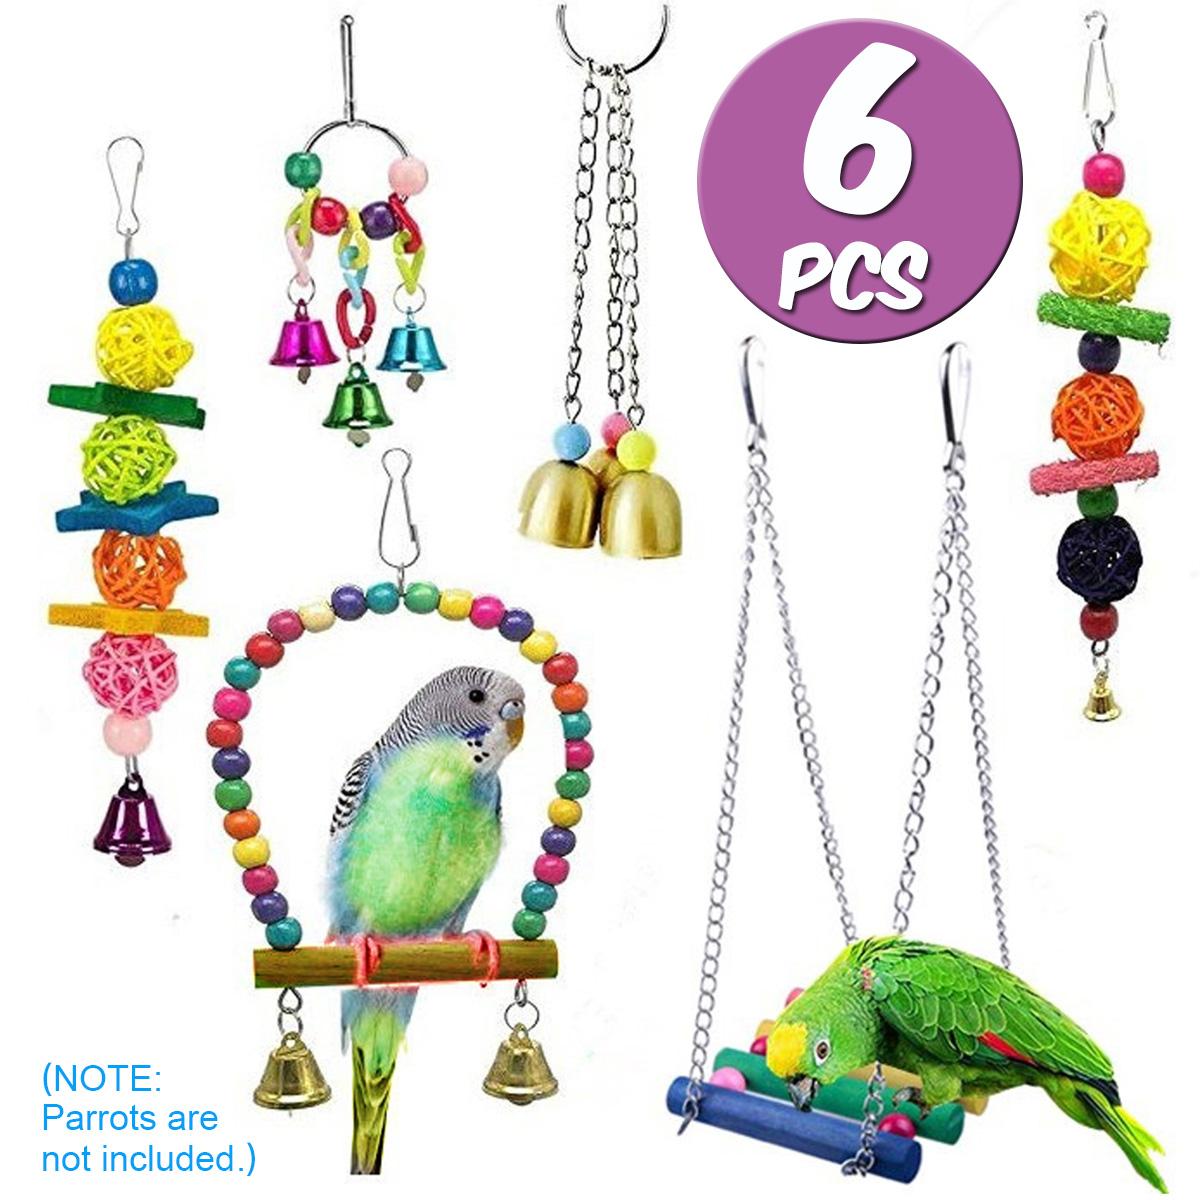 6 Pcs Vogel Papegaai Speelgoed, vogel Schommel Speelgoed Kleurrijke Kauwen Opknoping Hangmat Swing Bell Huisdier Klimmen Ladders Speelgoed Vogel Speelgoed